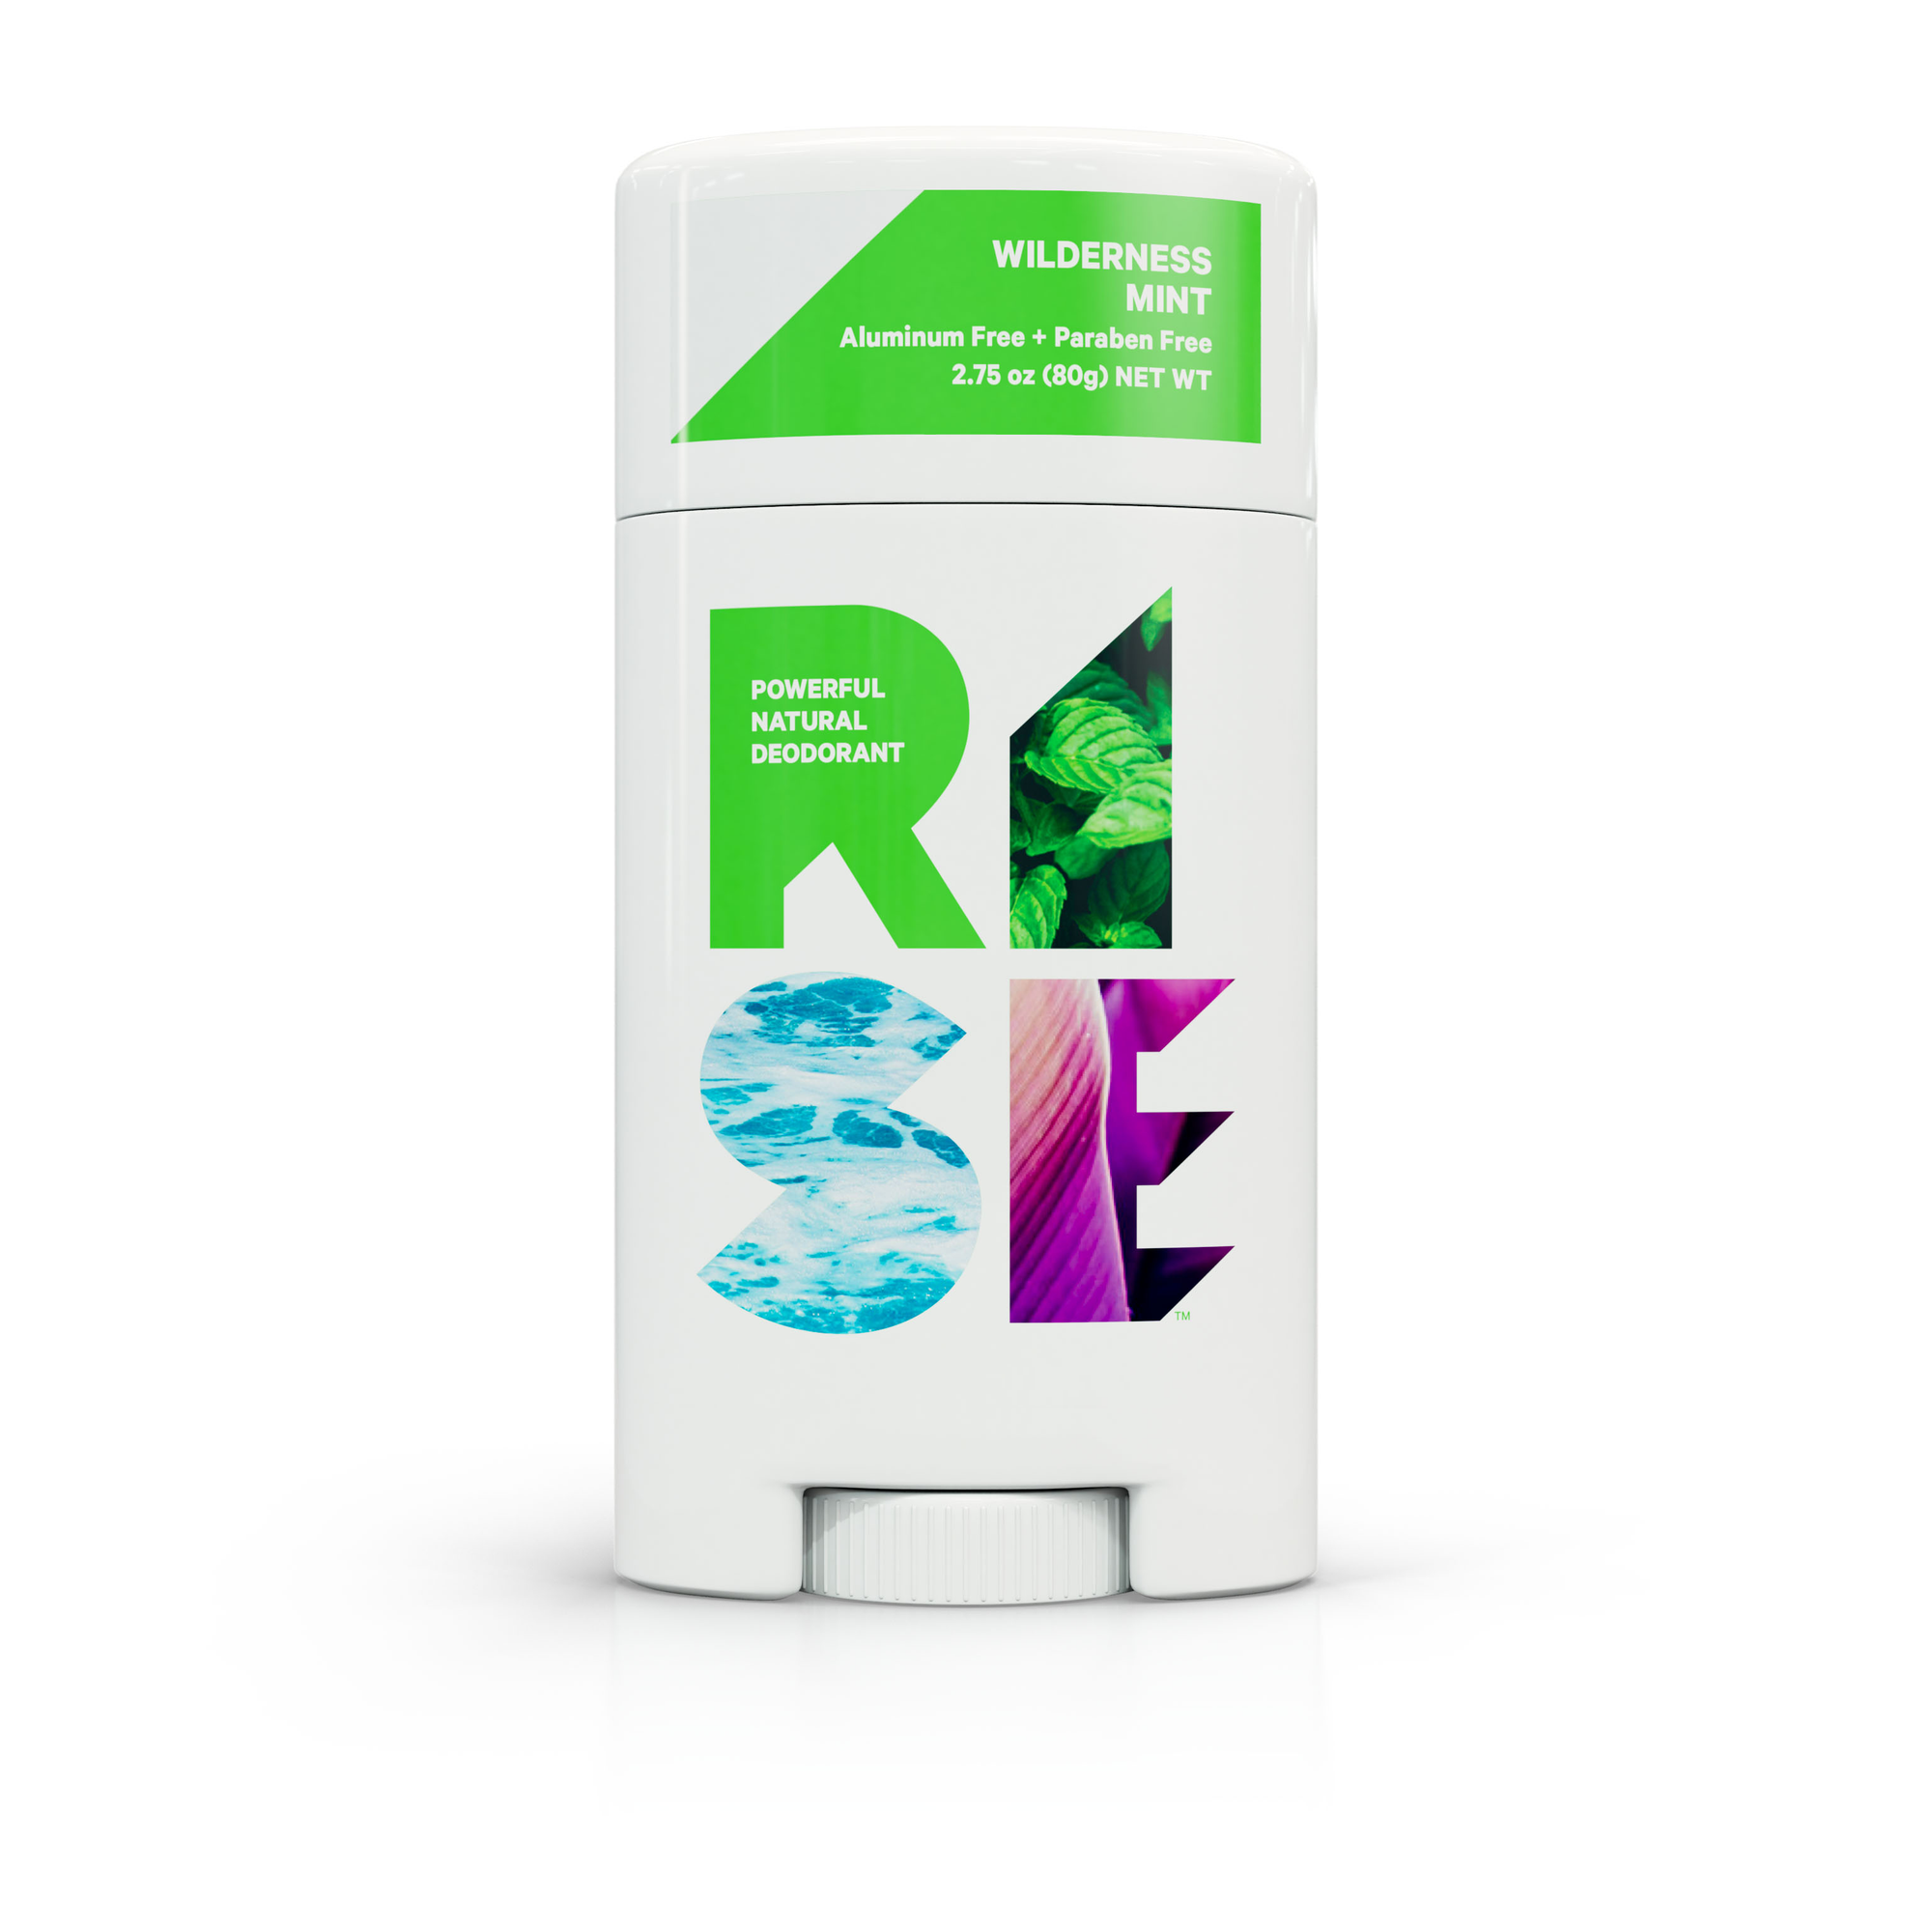 RISE- Powerful, natural deodorant - Wilderness Mint